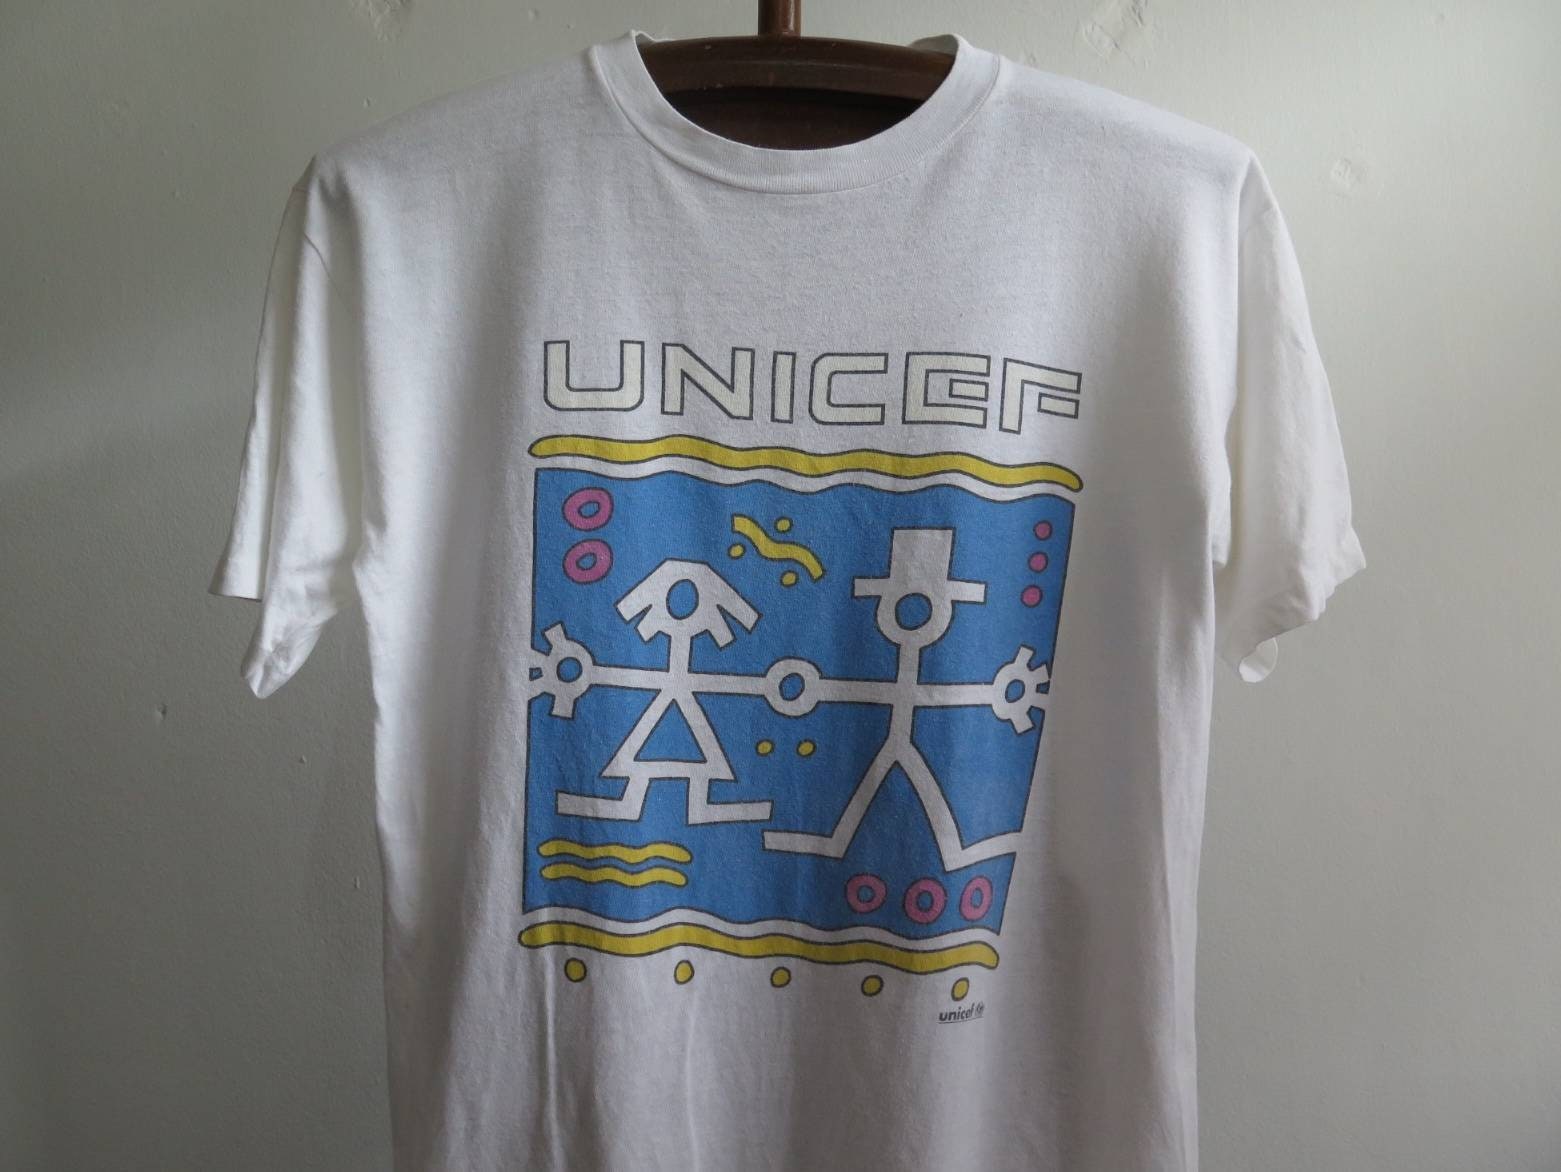 Vintage Unicef T Shirt 90s Unicef Tee United Nations Children's